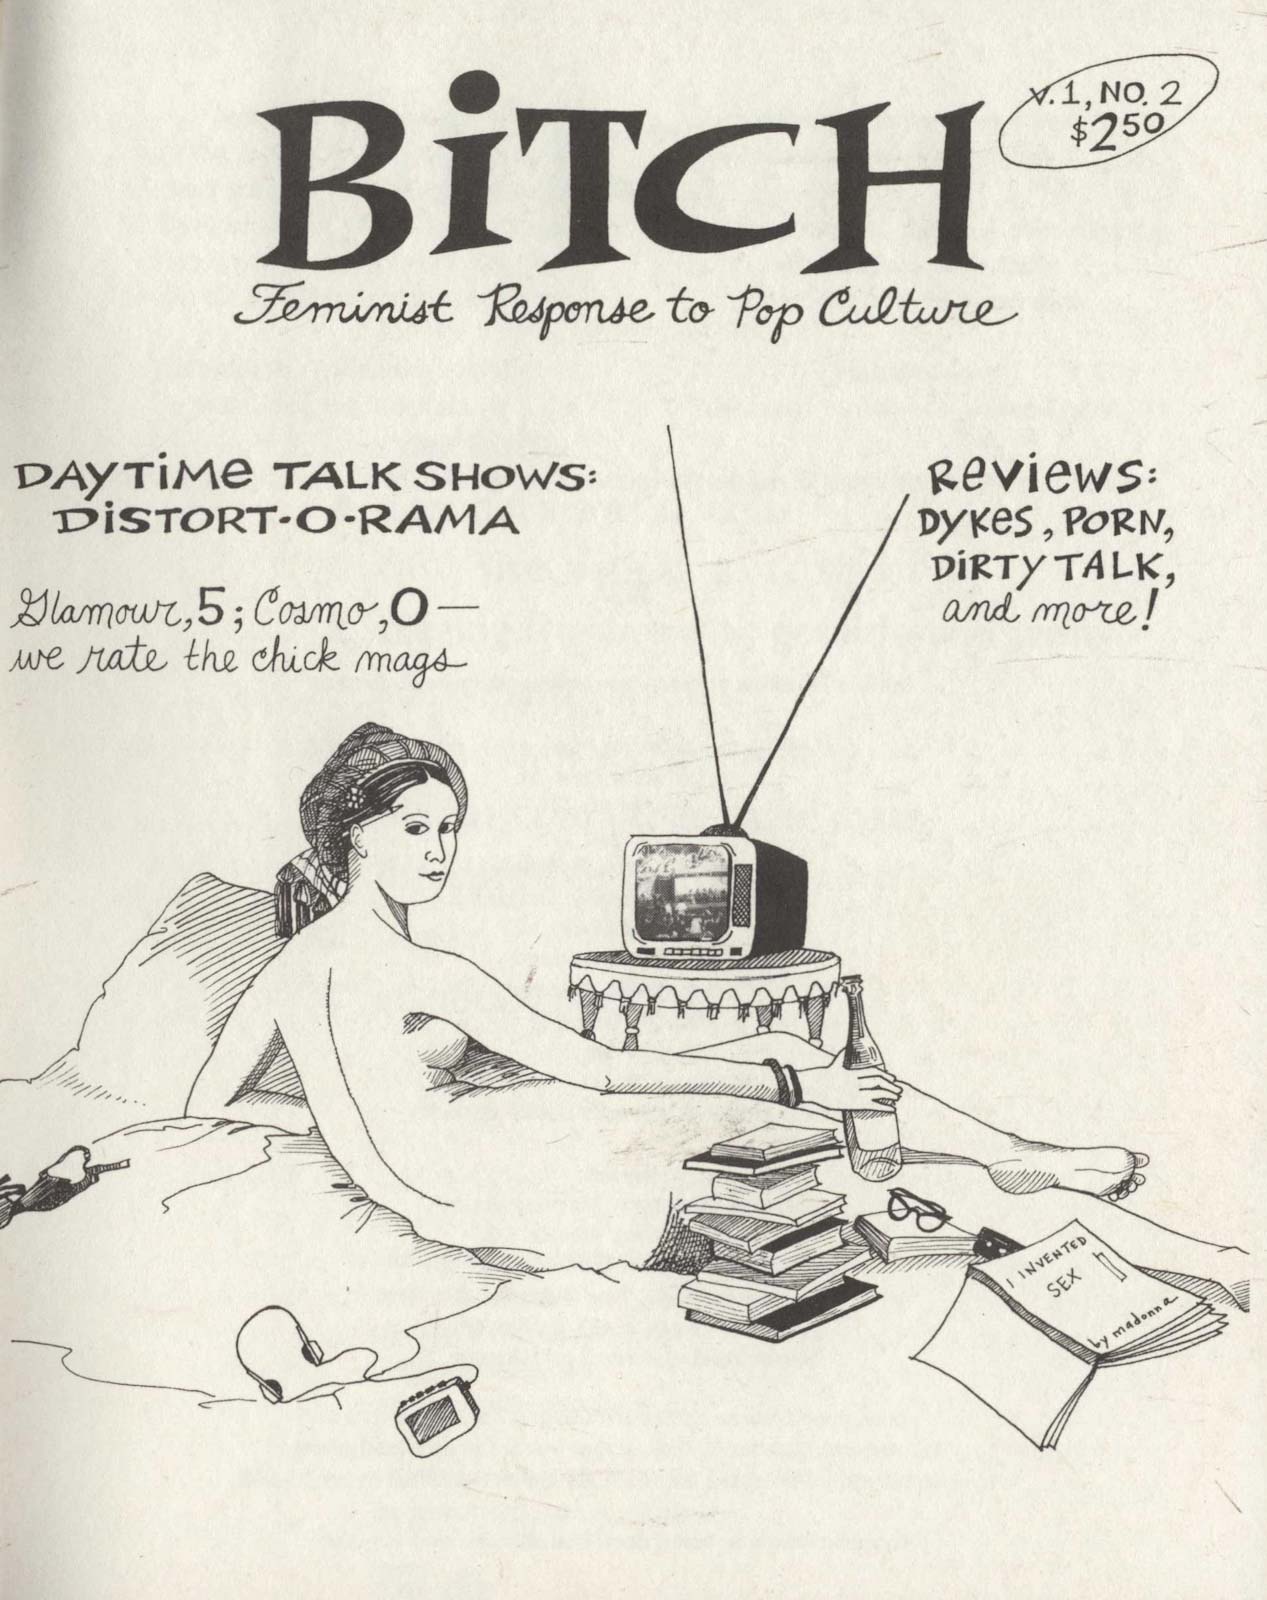 Bitch magazine cover